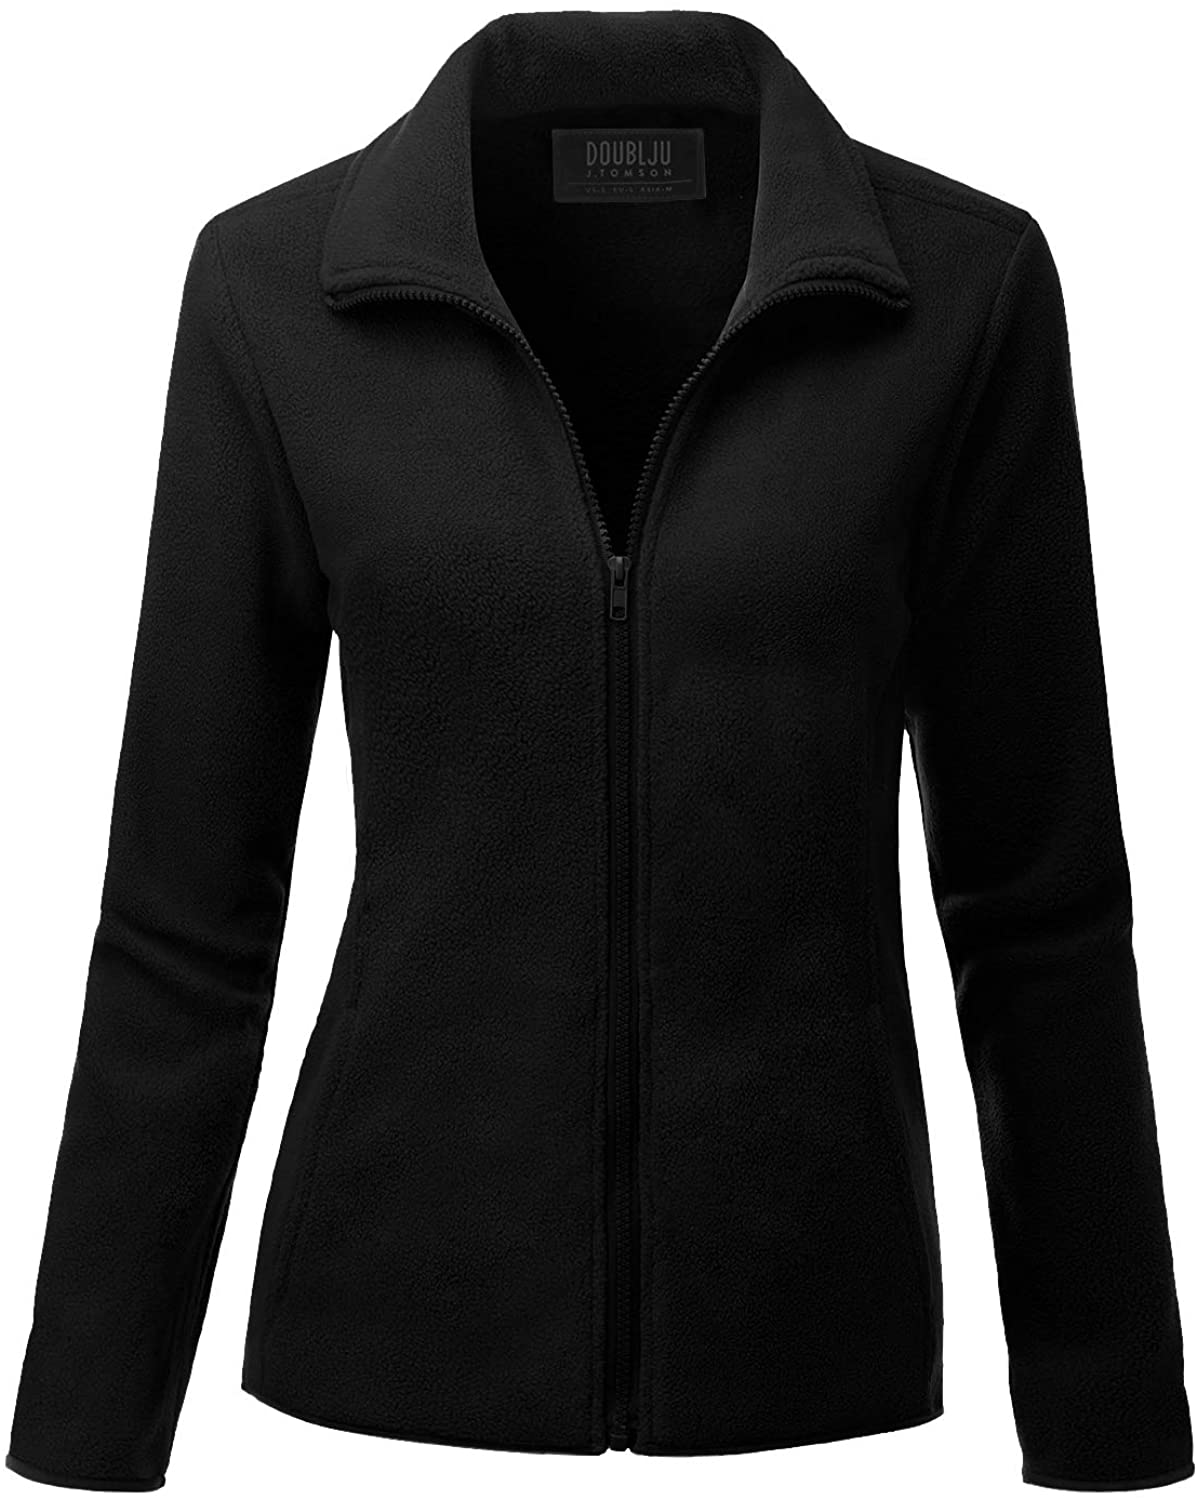 Doublju Womens Full Zip Fleece Jacket With Pockets (Plus Size Available)